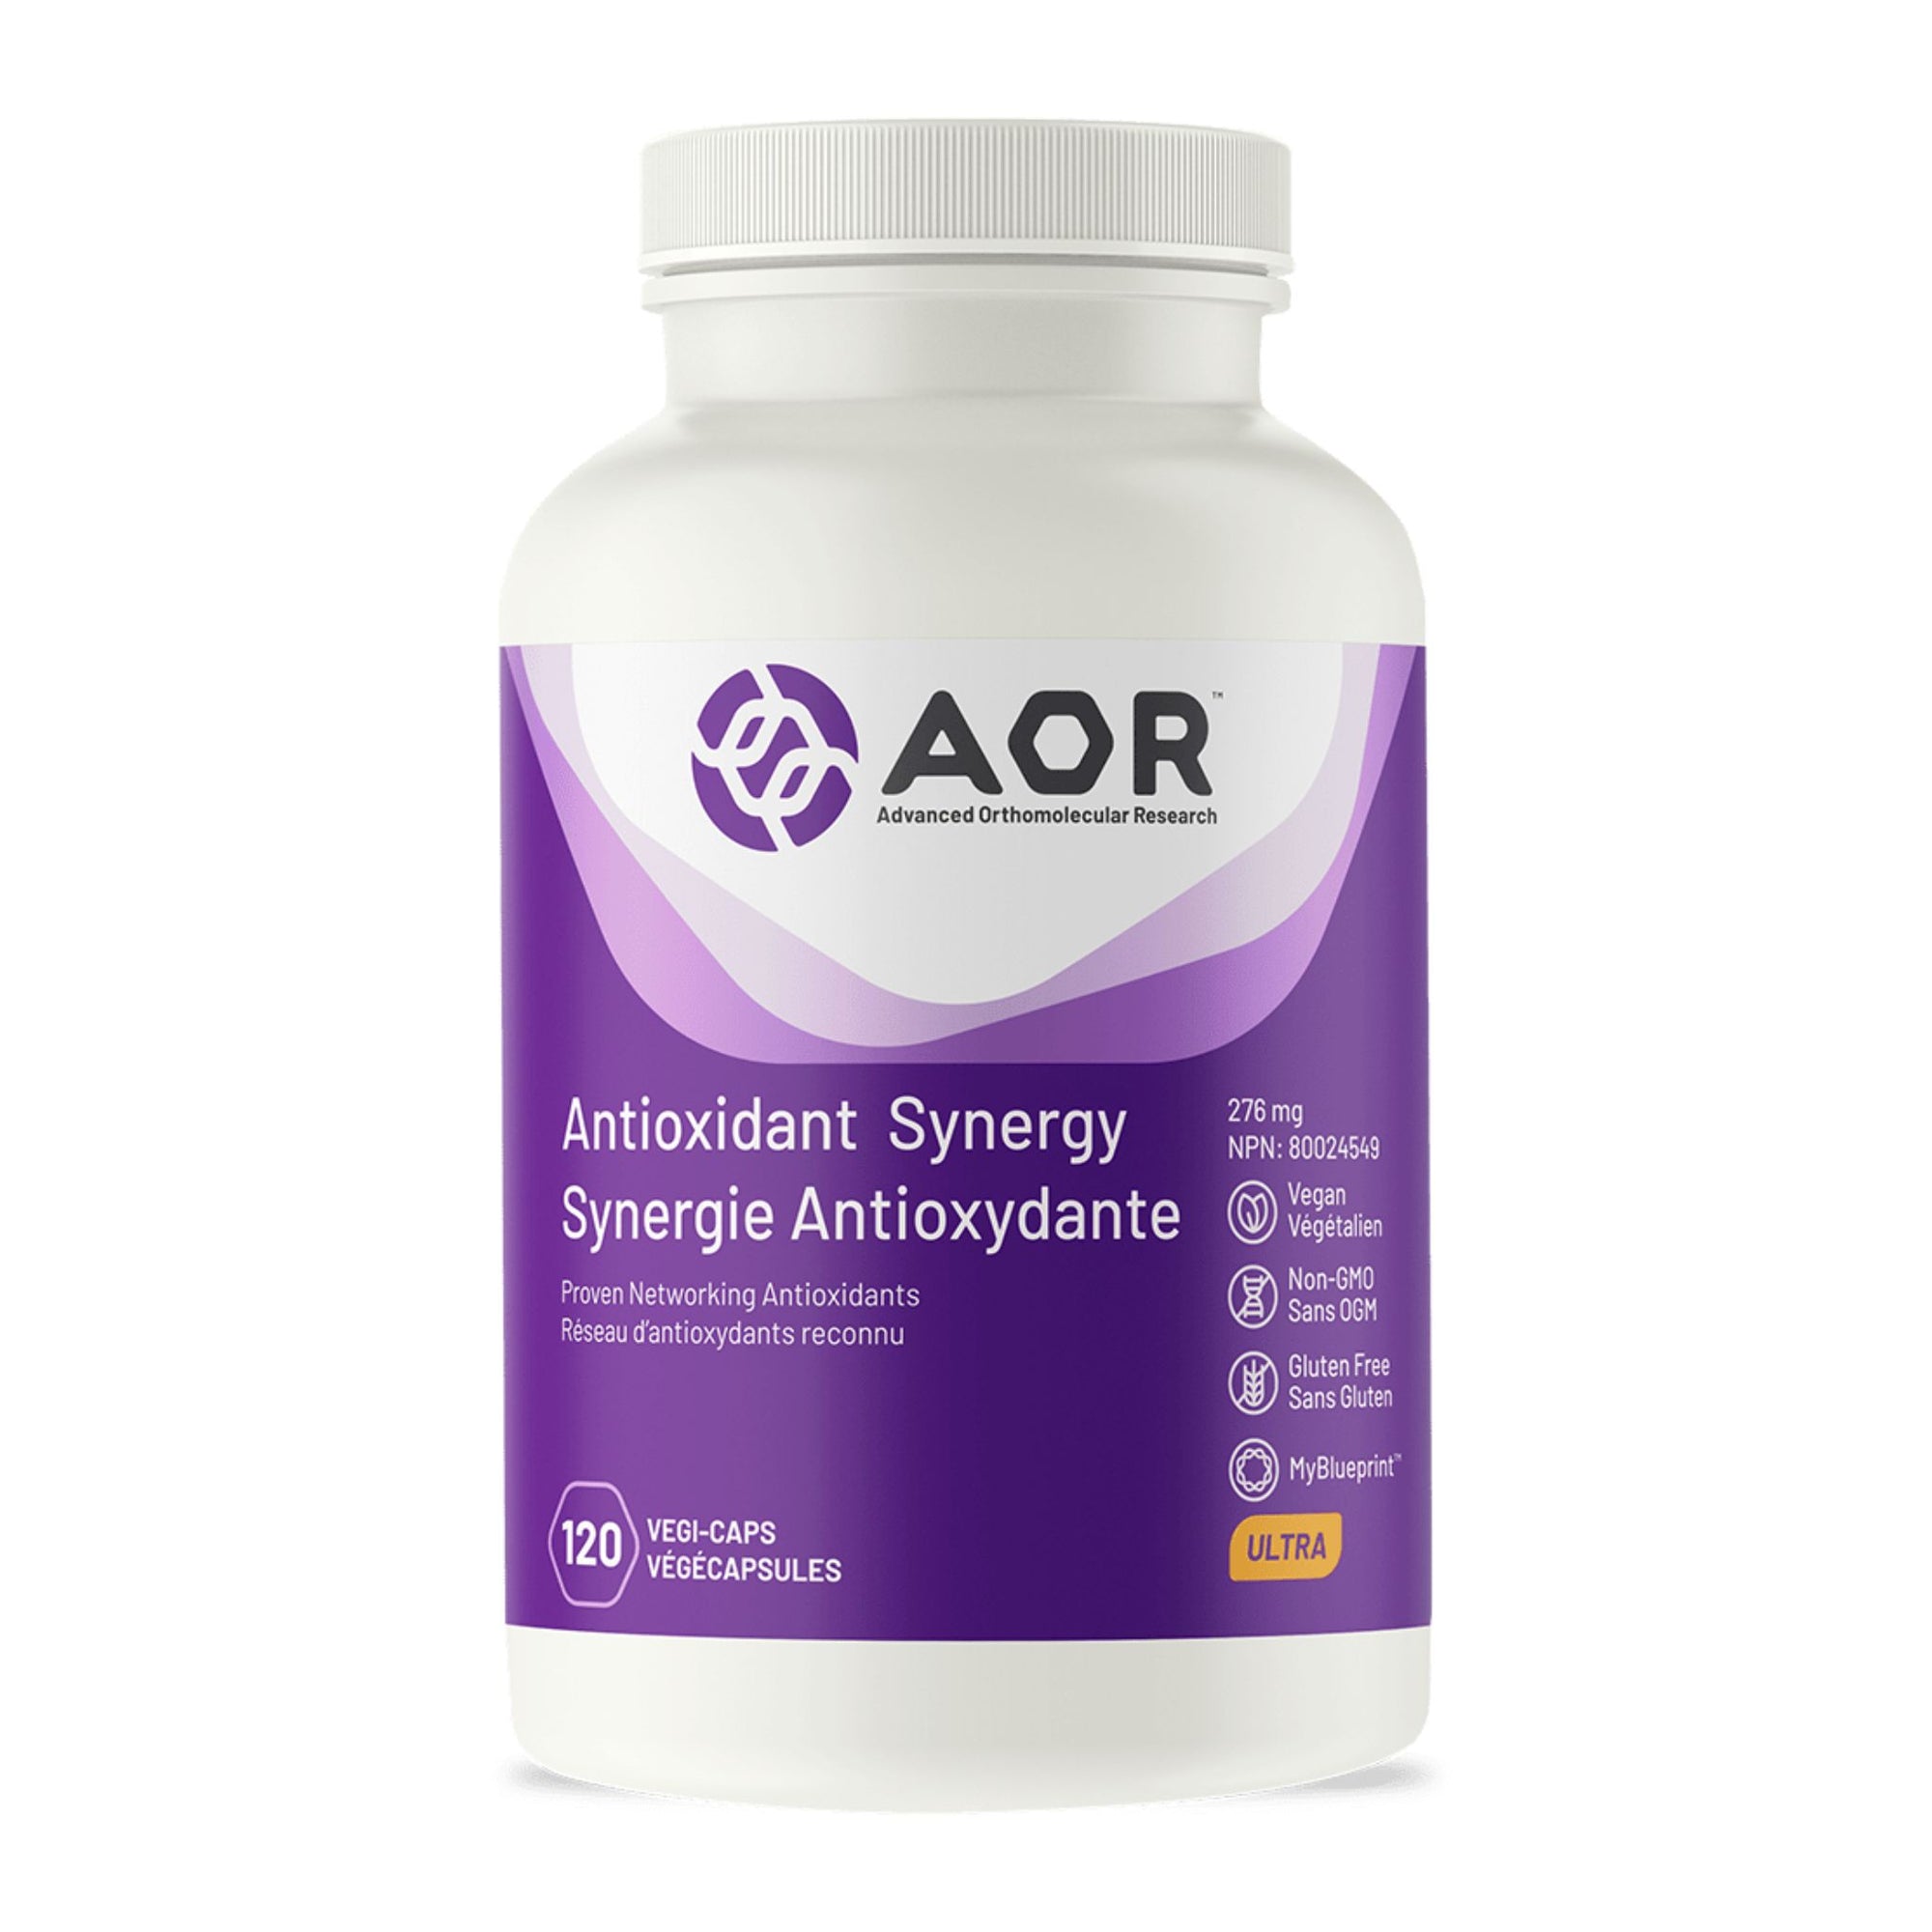 AOR Antioxidant Synergy 120 vegetable capsules - proven networking antioxidants for the maintenance of good health - vegan, non-GMO, gluten free 